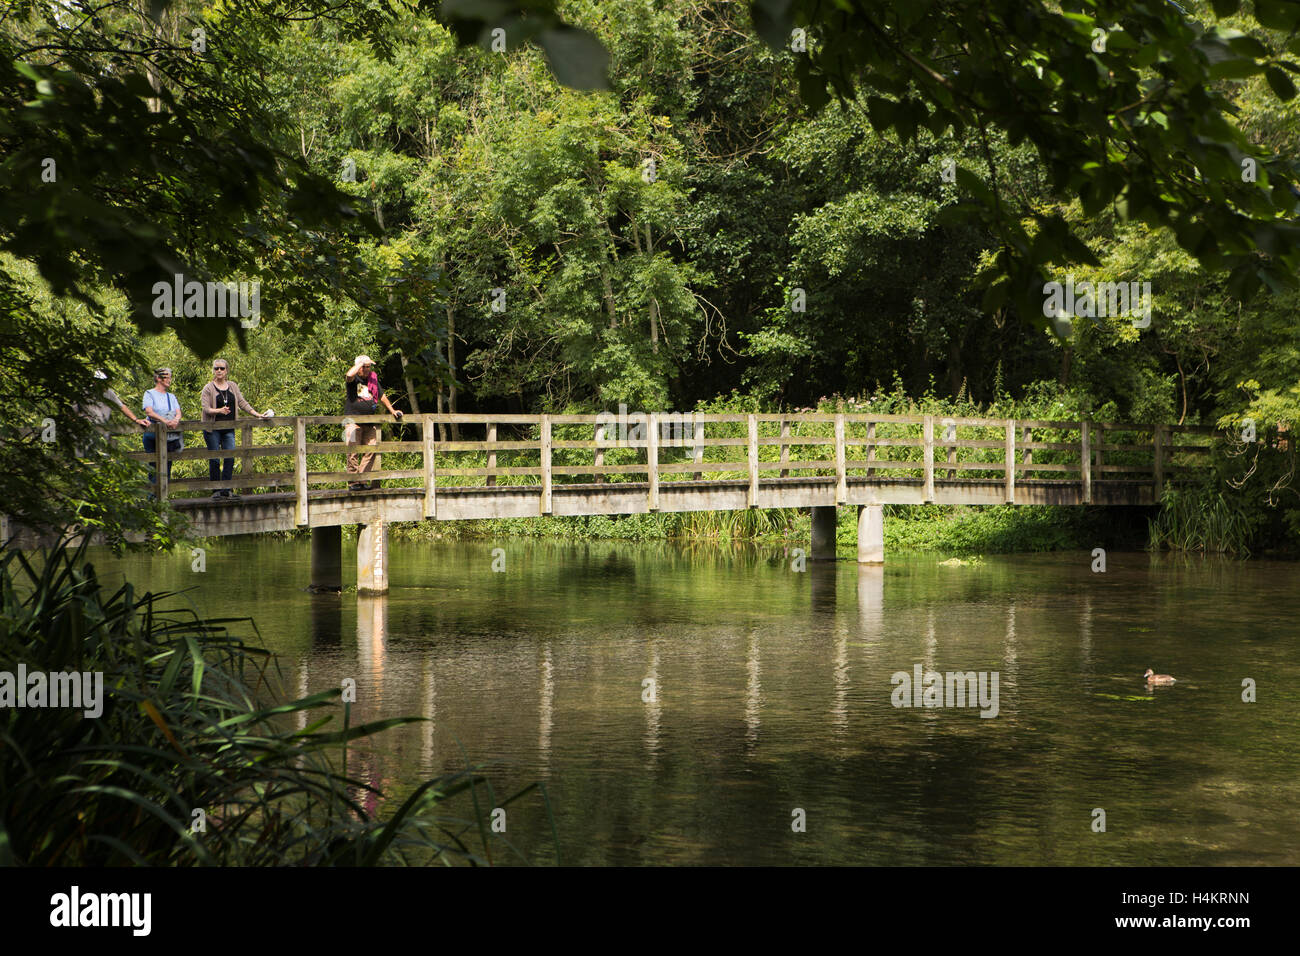 England, Wiltshire, Chilton Foliat, people on footbridge over River Kennet Stock Photo